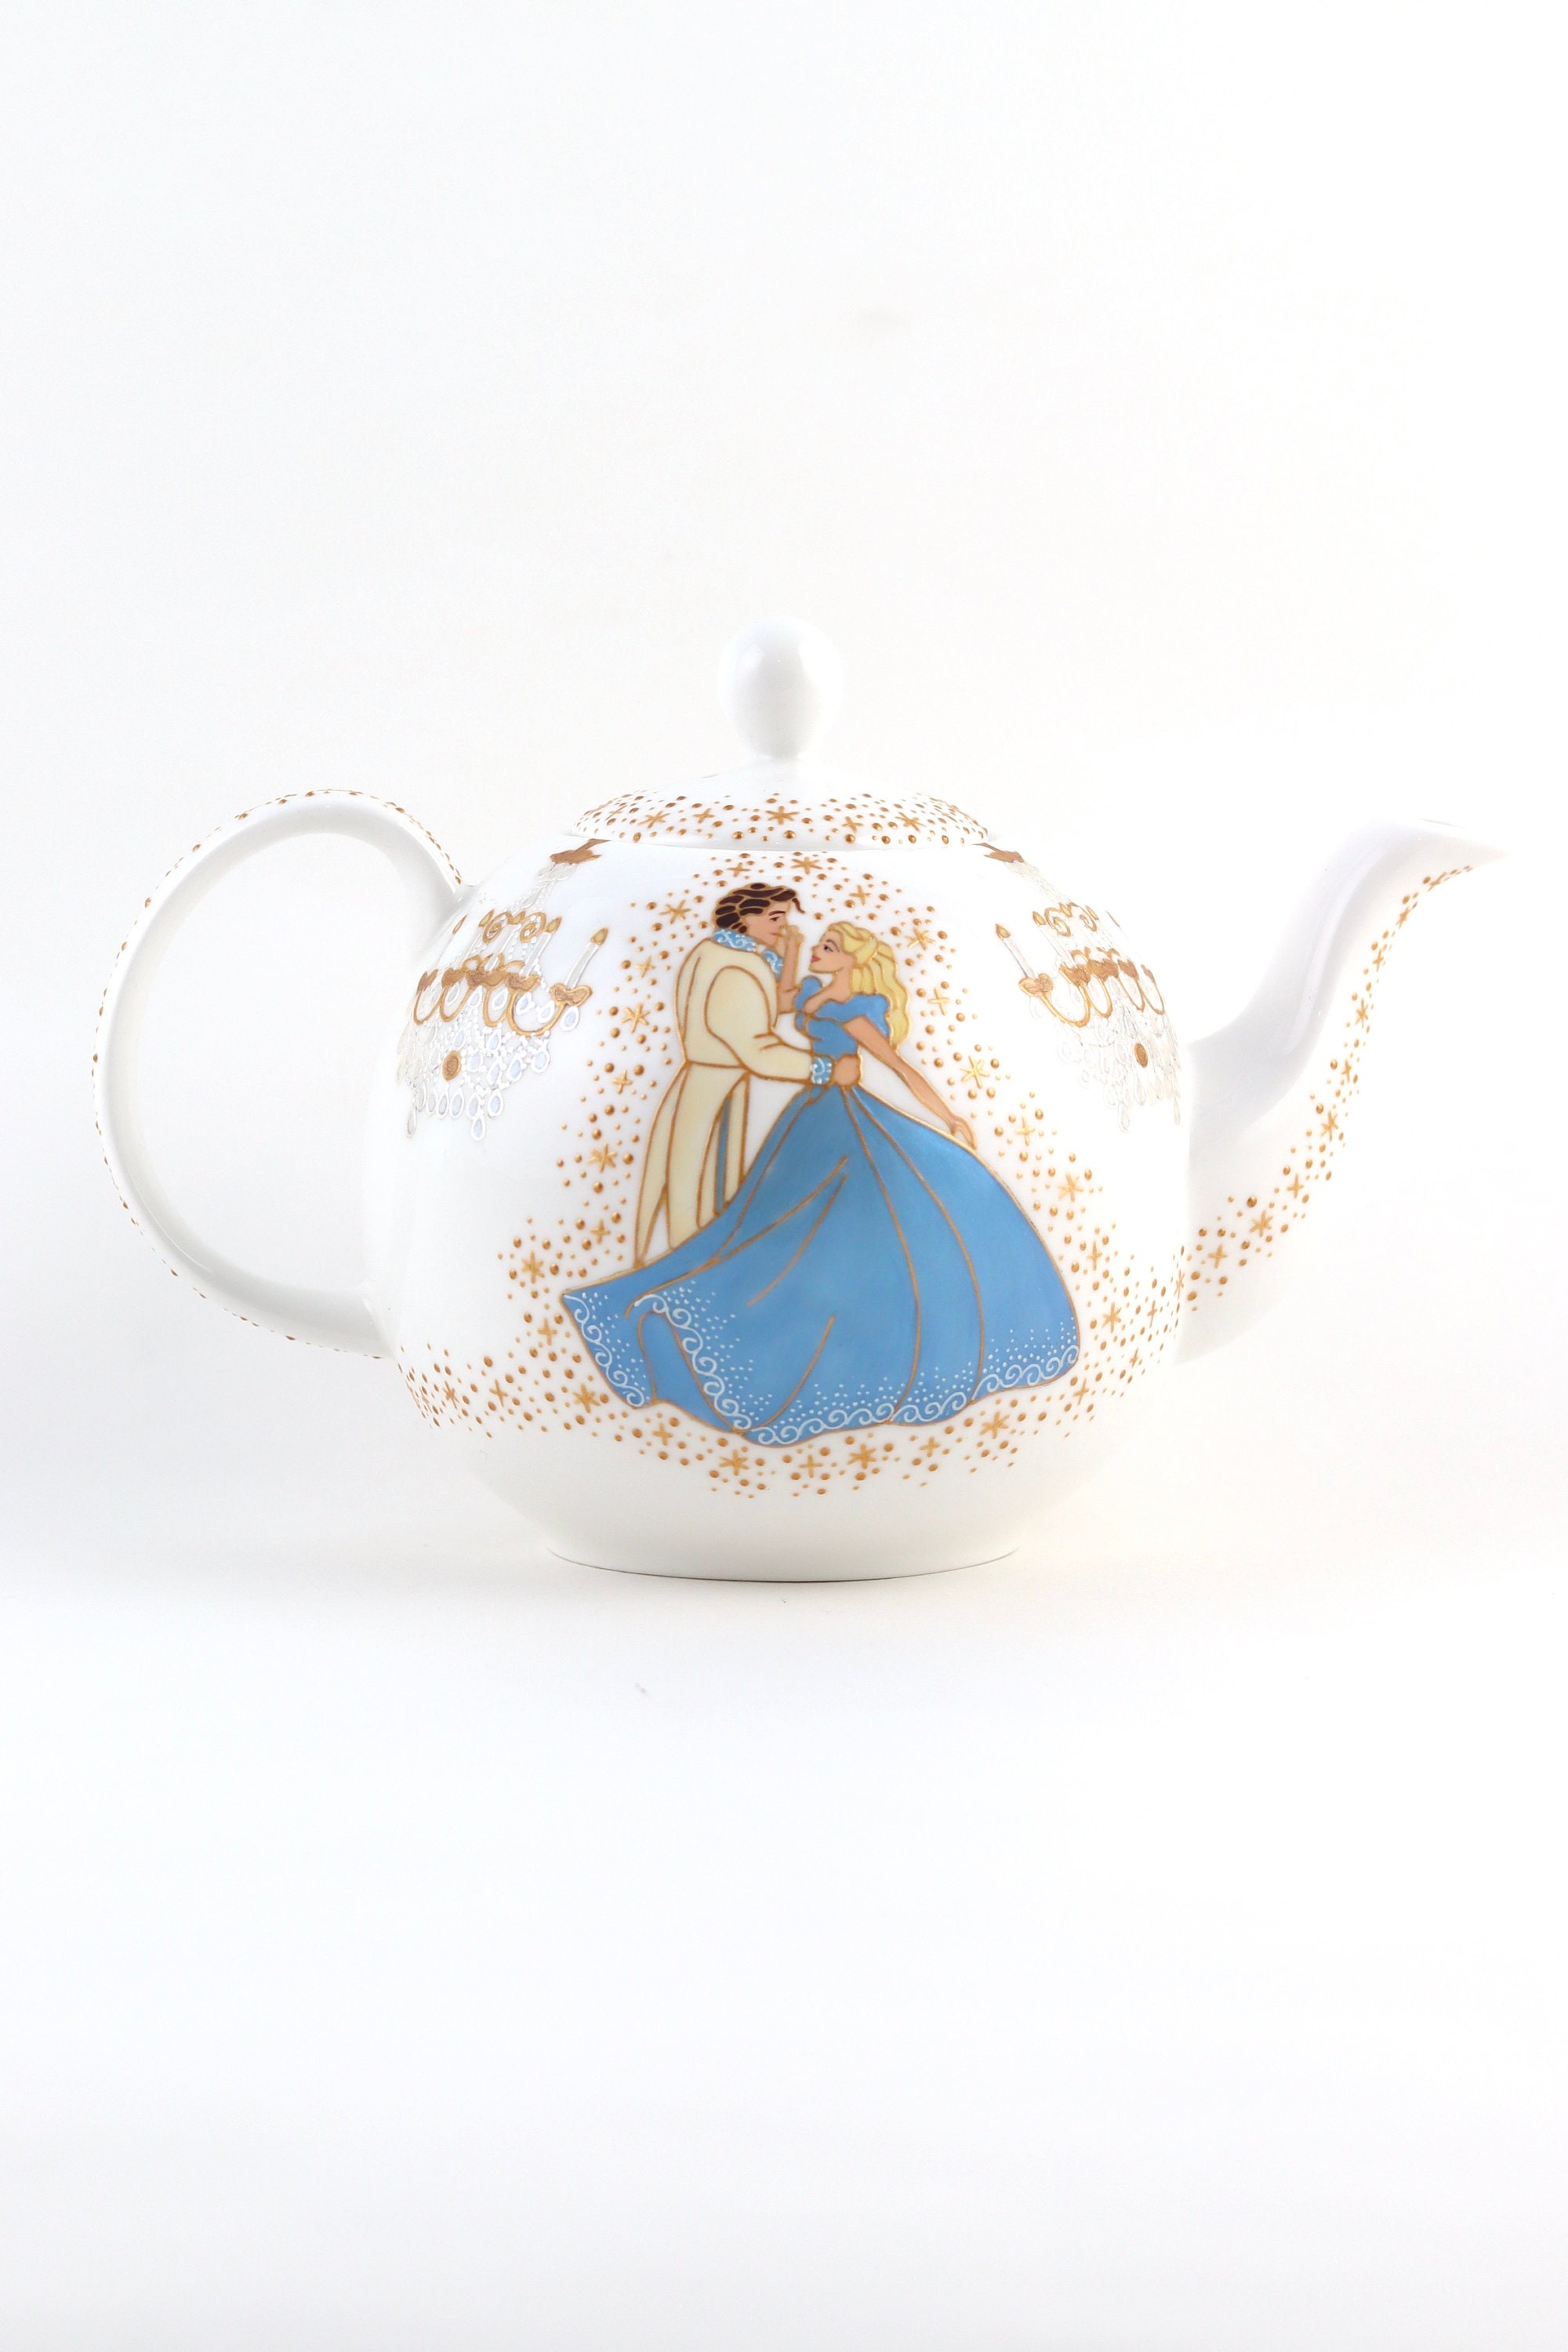 RARE Cinderella Tea Pot Creamer & Sugar Set Disneyland Fanciful